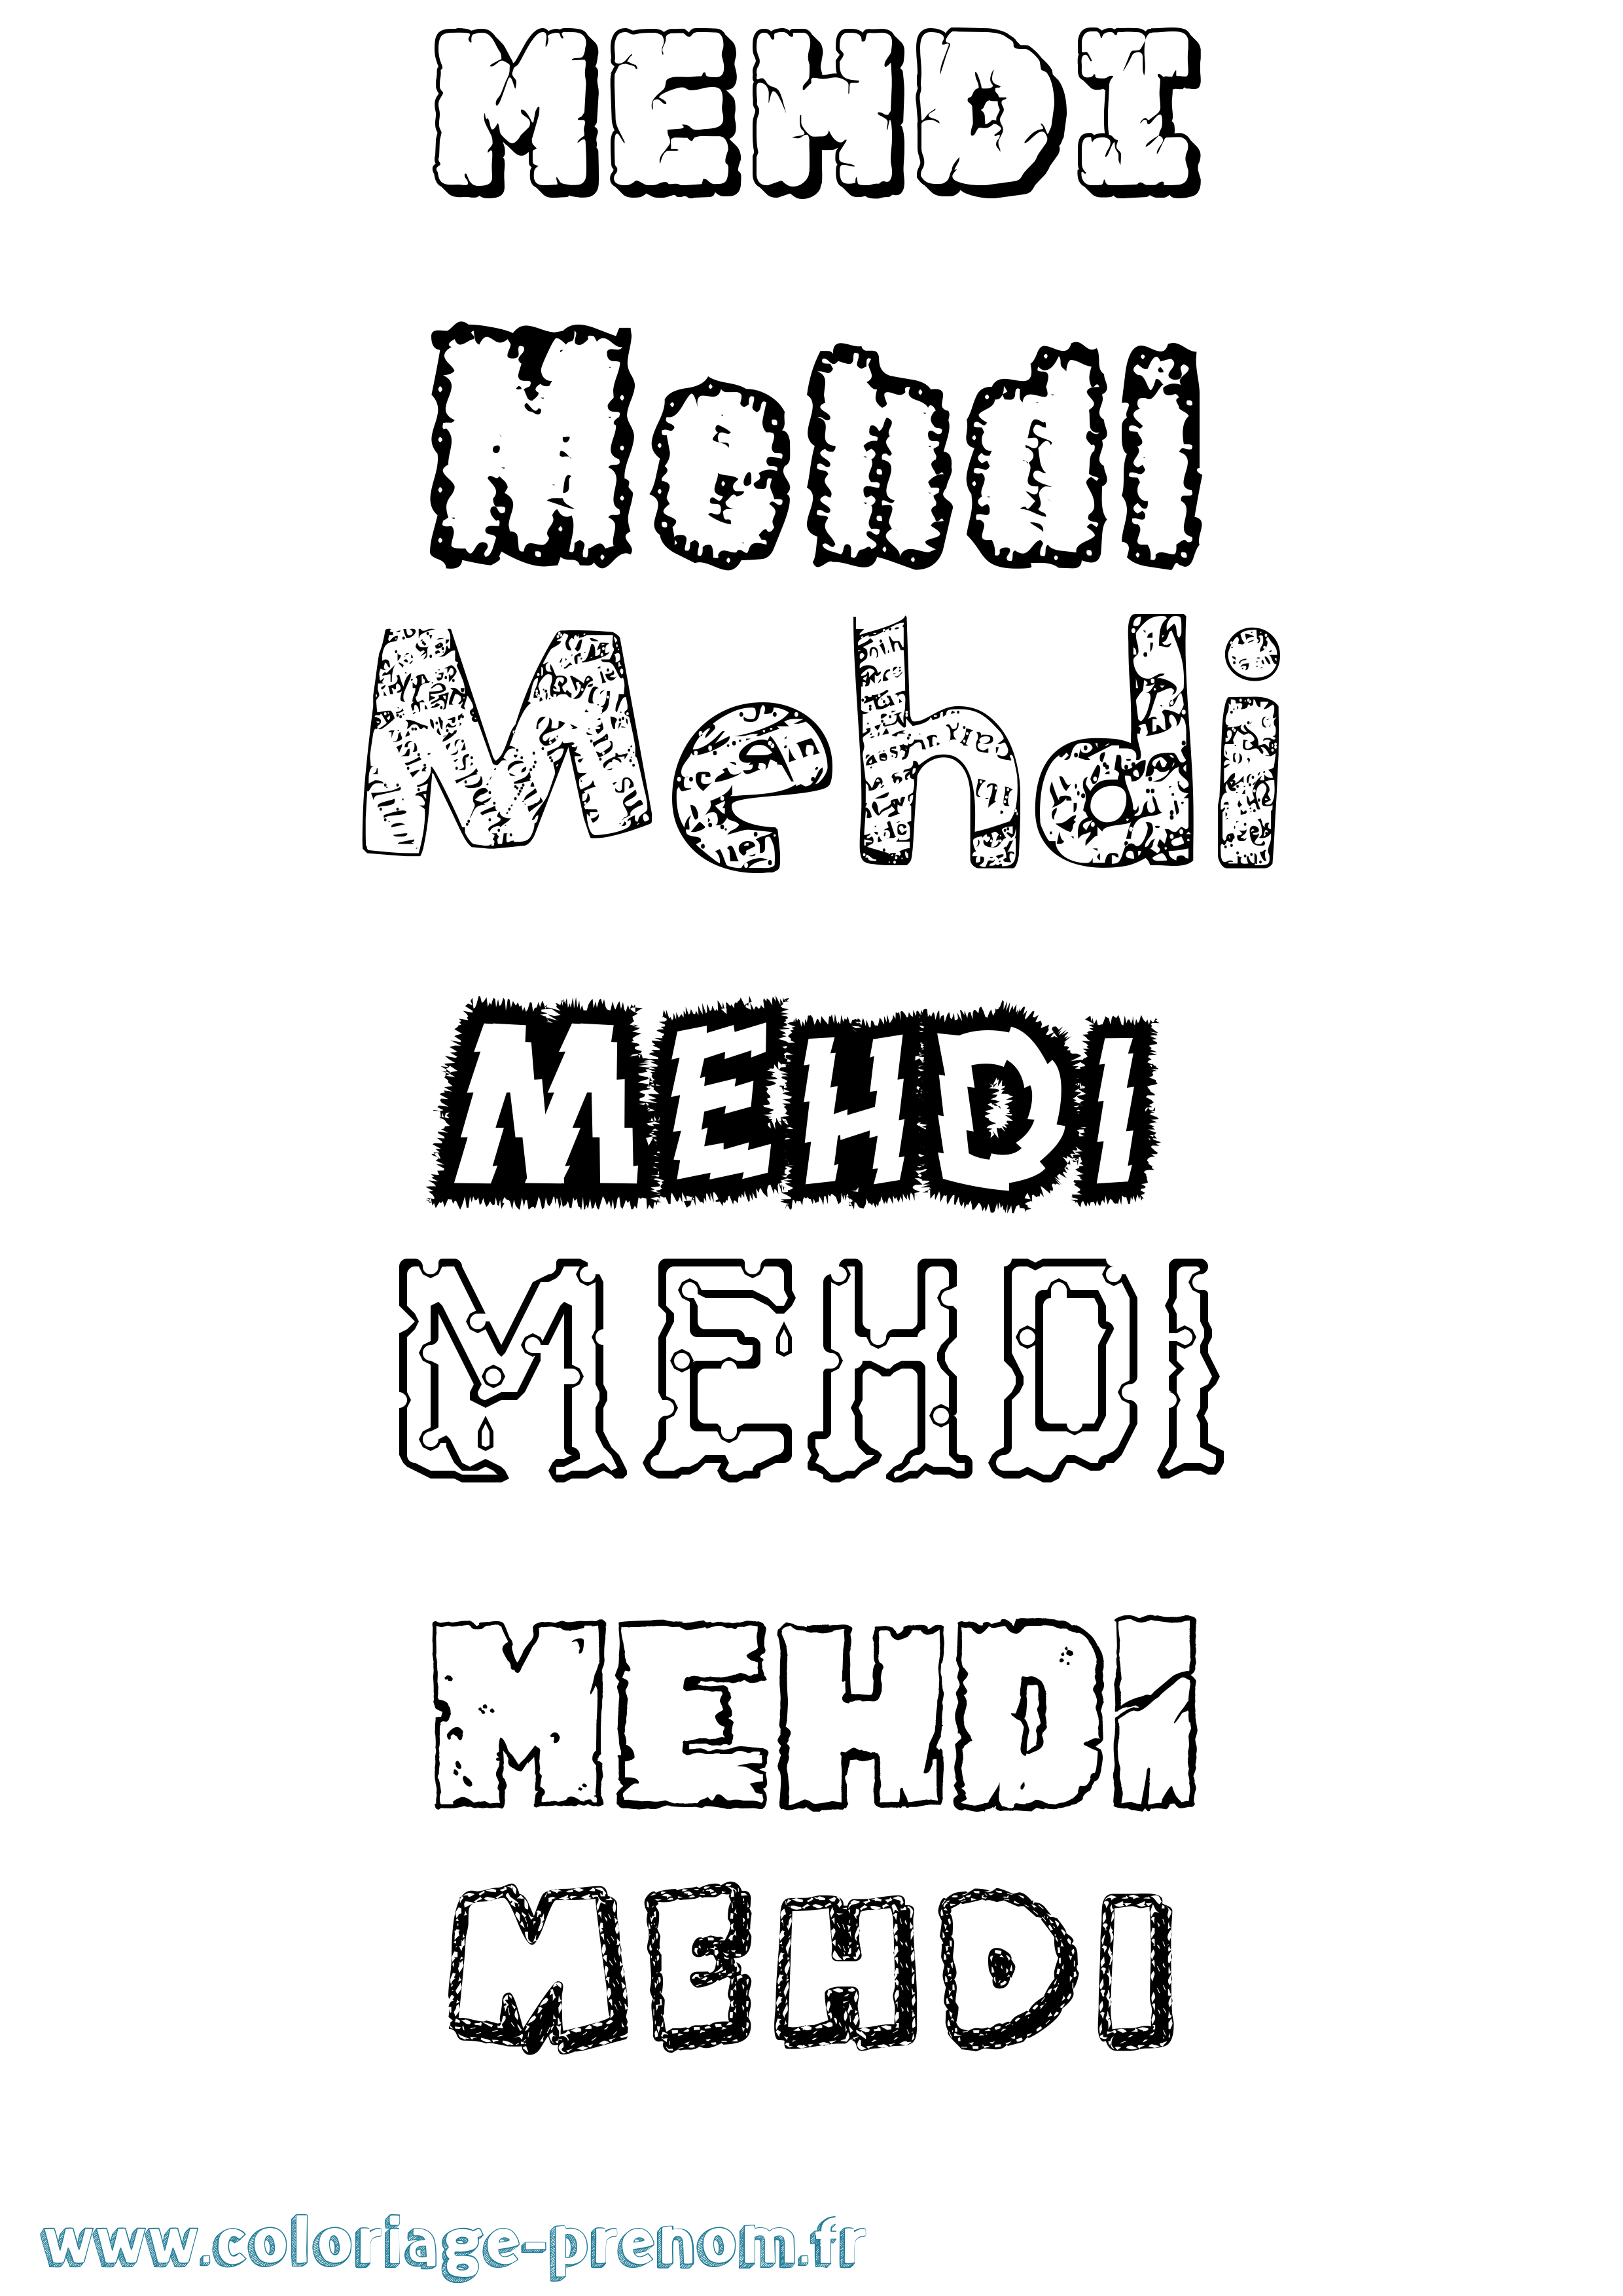 Coloriage prénom Mehdi